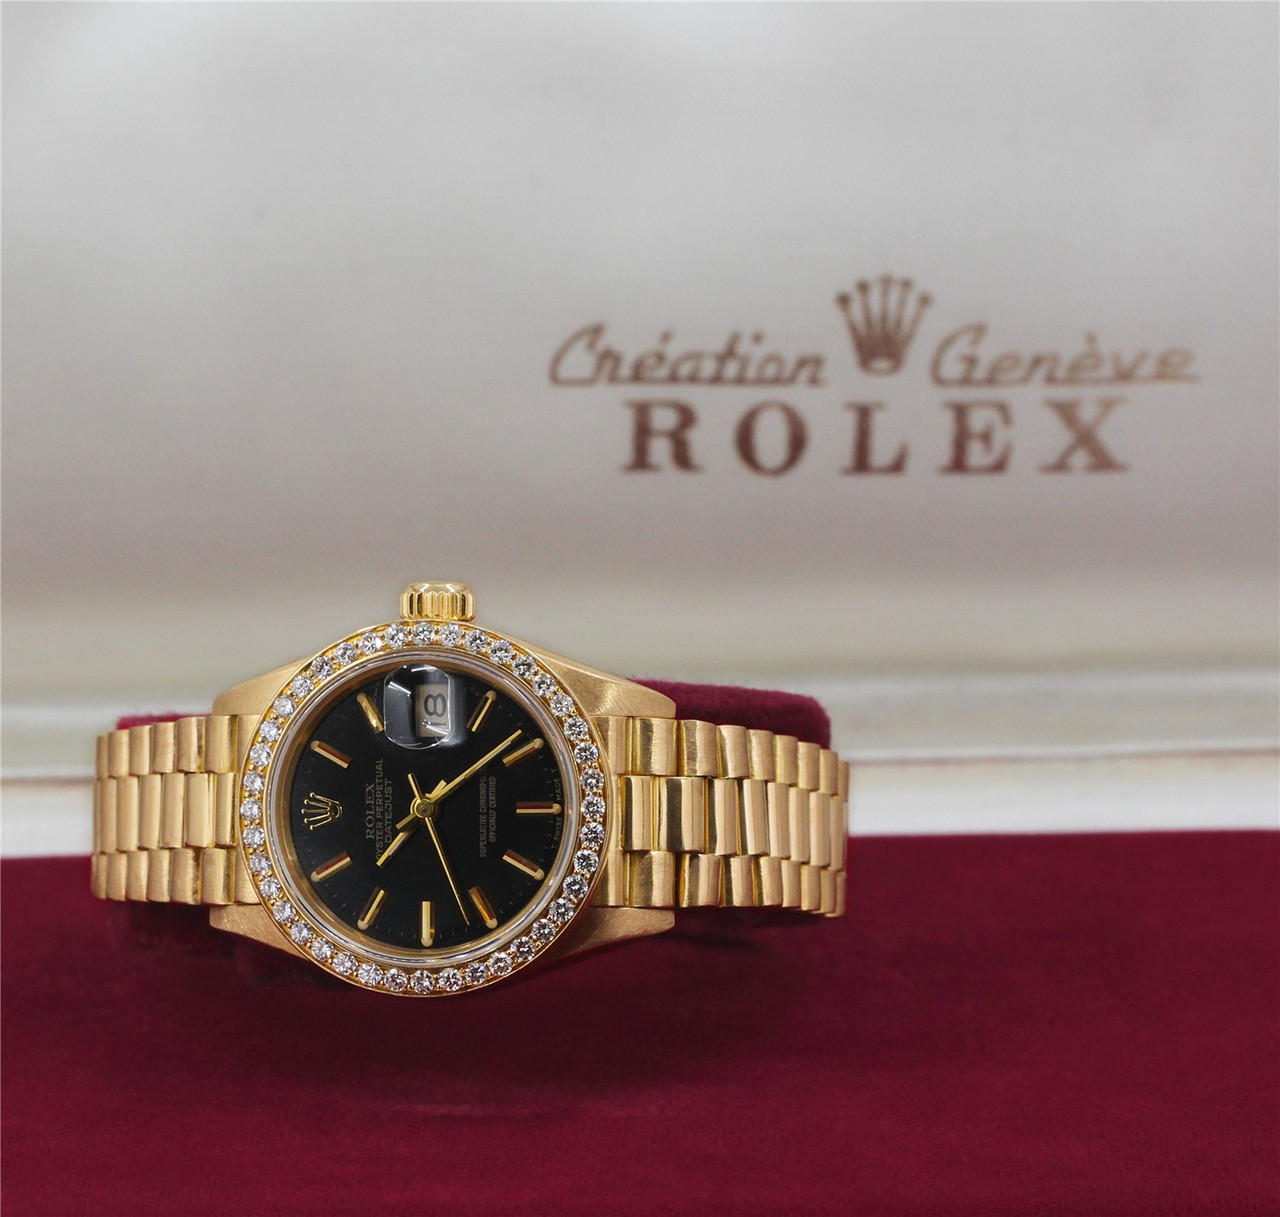 Rolex Women's President Datejust 18K Gold Watch